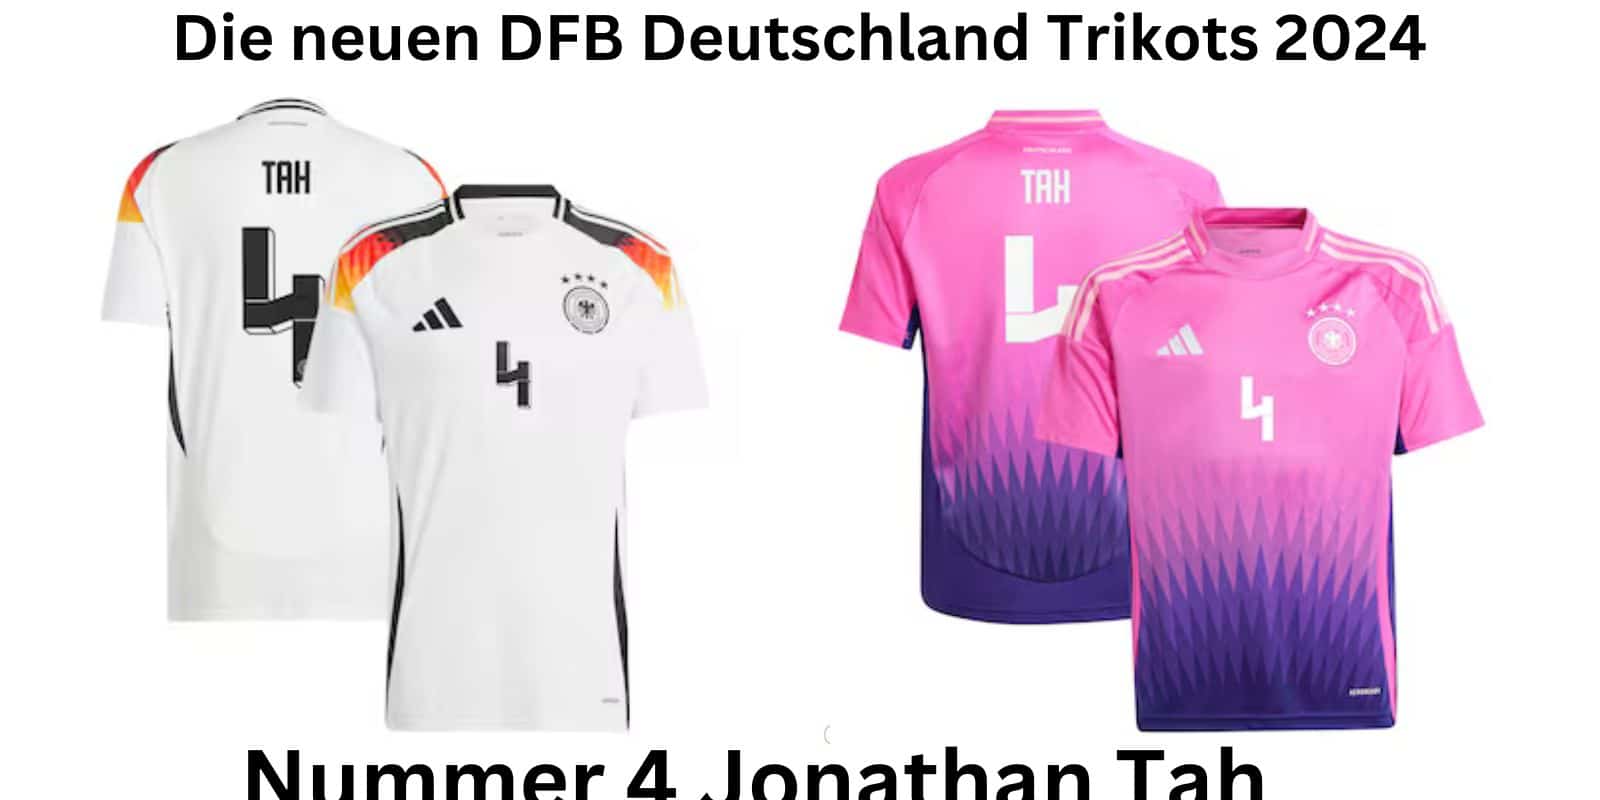 Jonathan Tah trägt die Nummer 4 im DFB Trikot